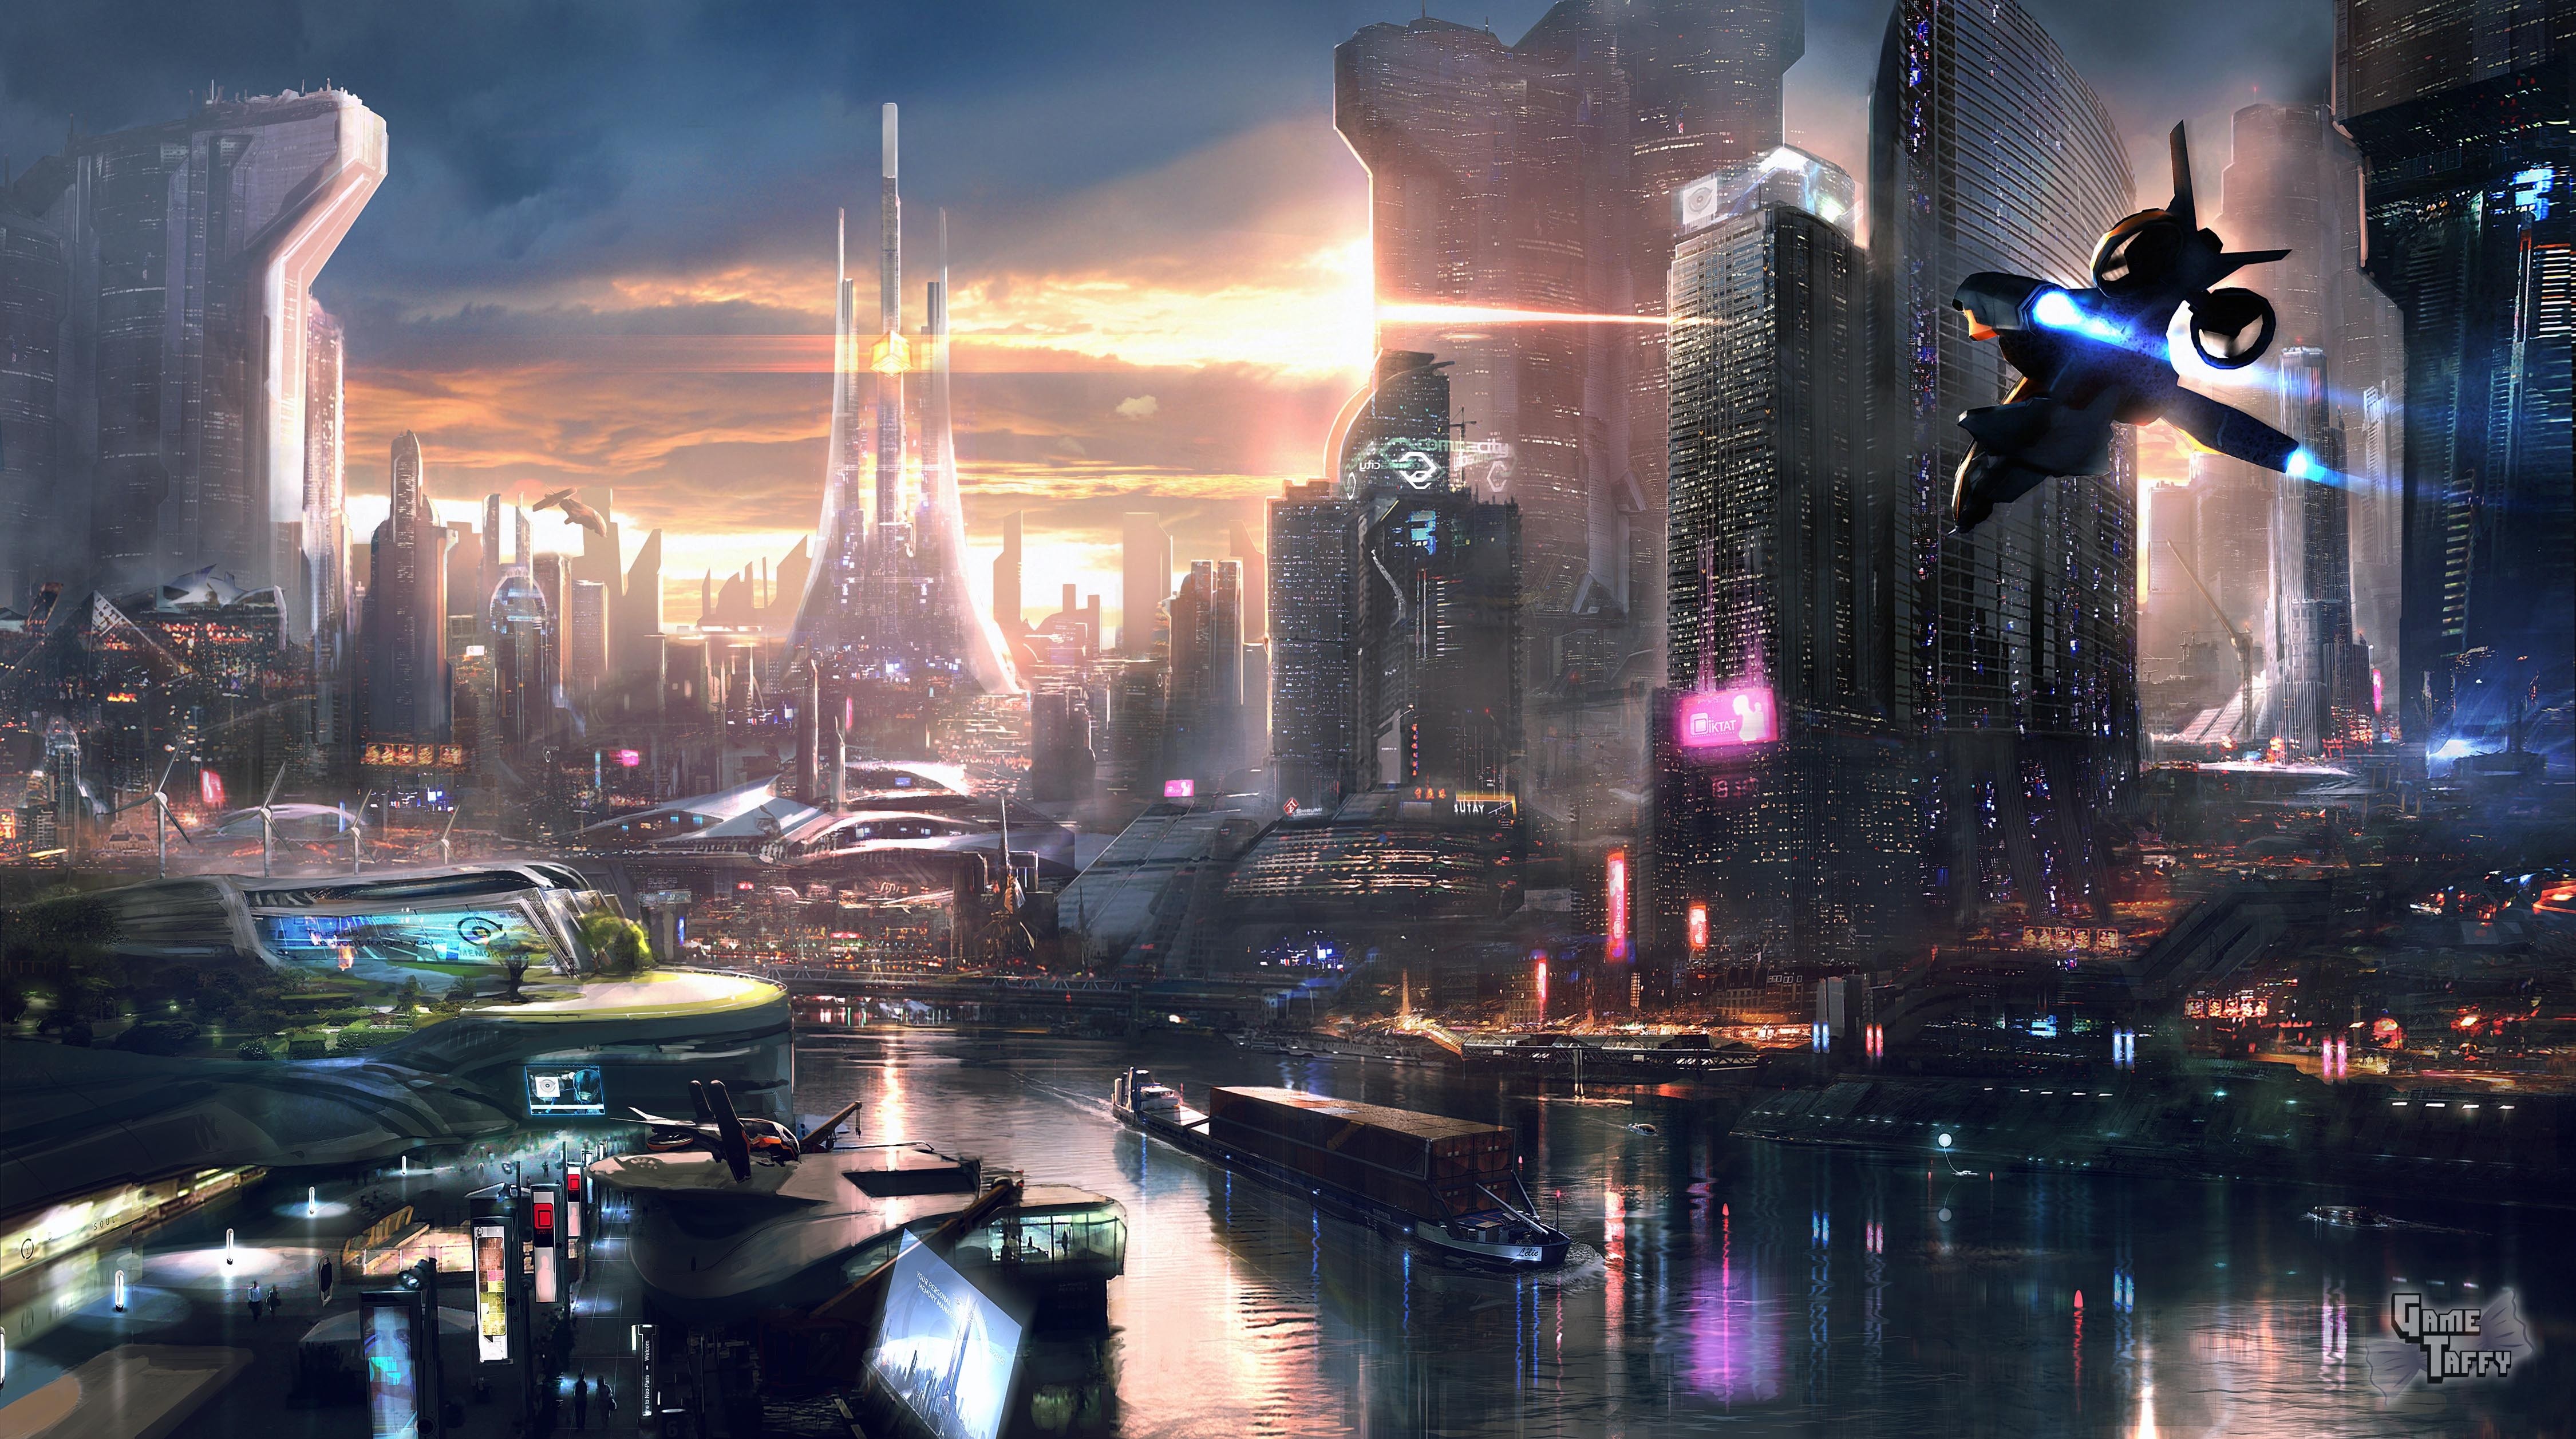 General 4500x2514 Remember Me metropolis  video games PC gaming futuristic science fiction video game art futuristic city